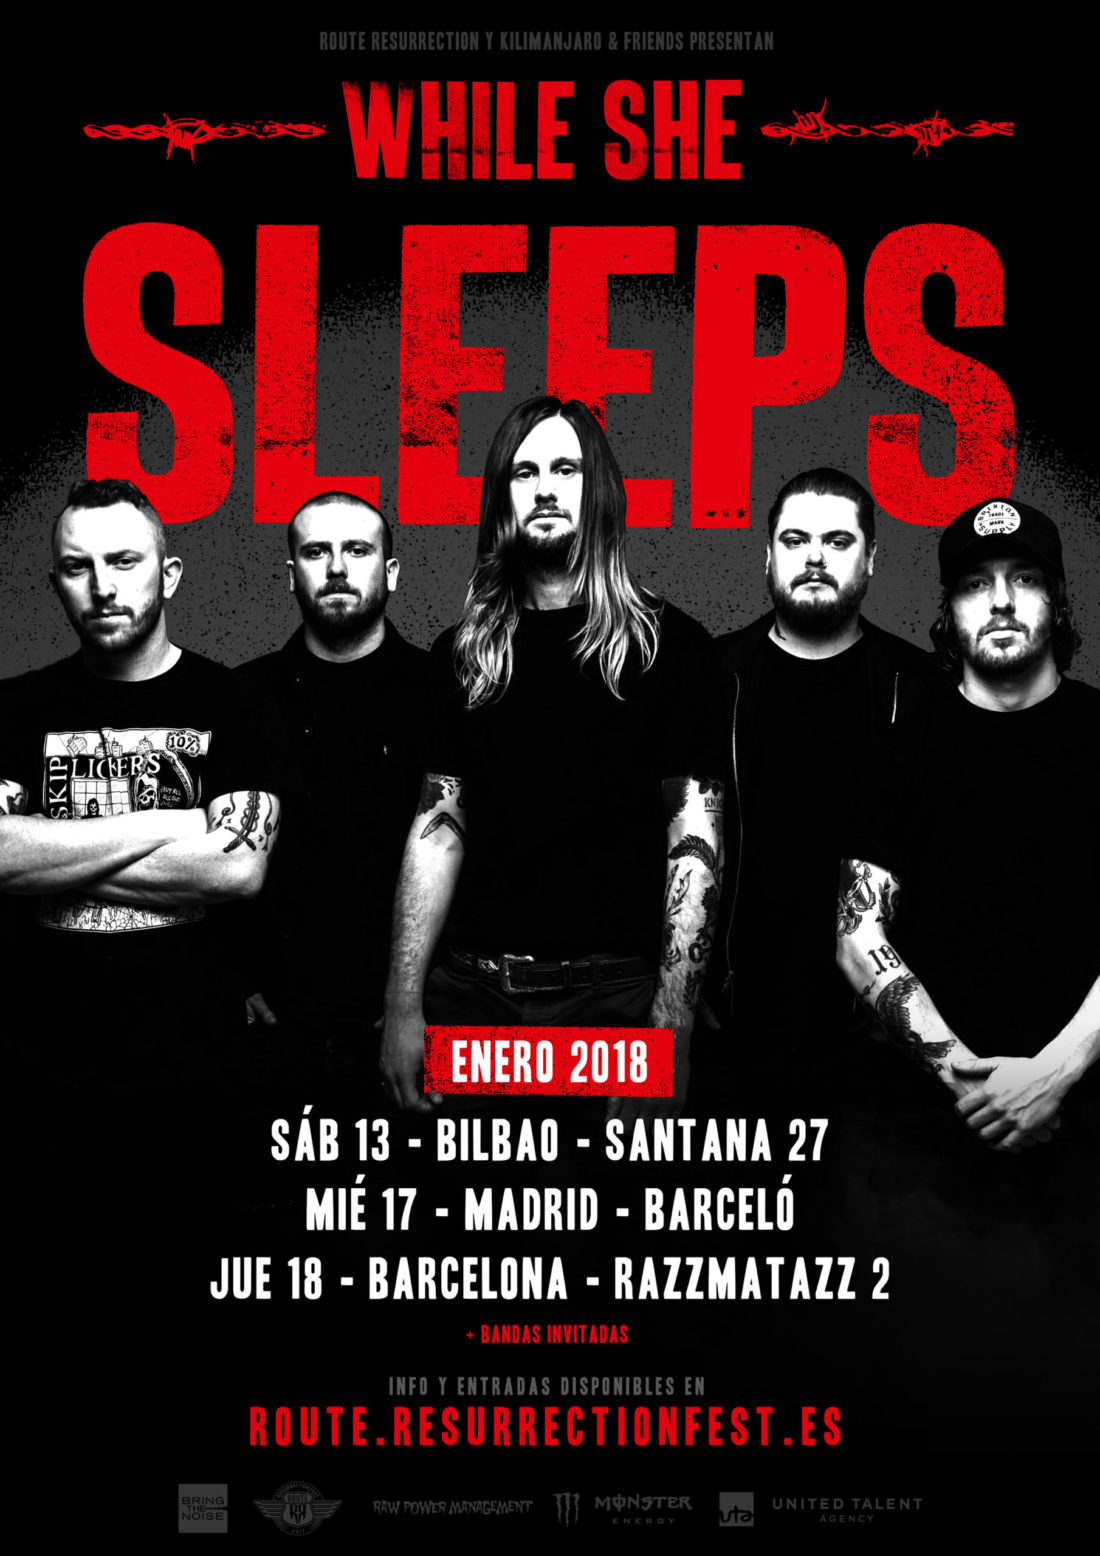 Nueva gira Route Resurrection: While She Sleeps